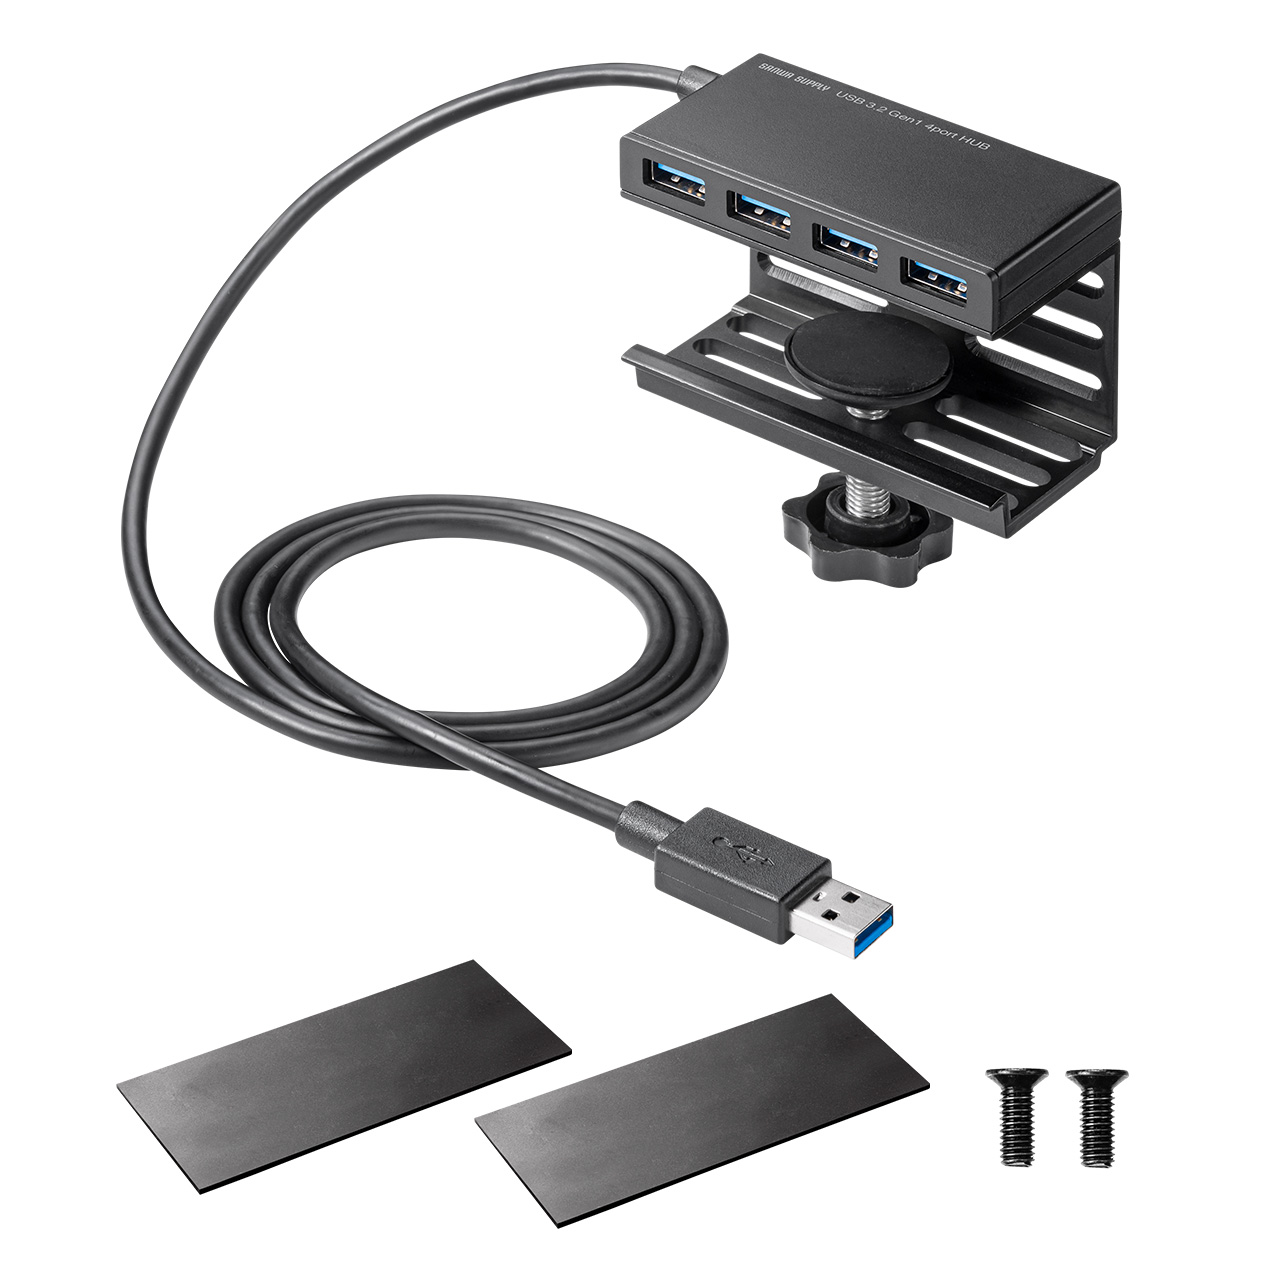 USBnu Nv USB-A USB3.2 Gen1 4|[g Œ P[u1m 400-HUBA097+400-HUBCLAMP̃Zbg 402-HUBA097SET1